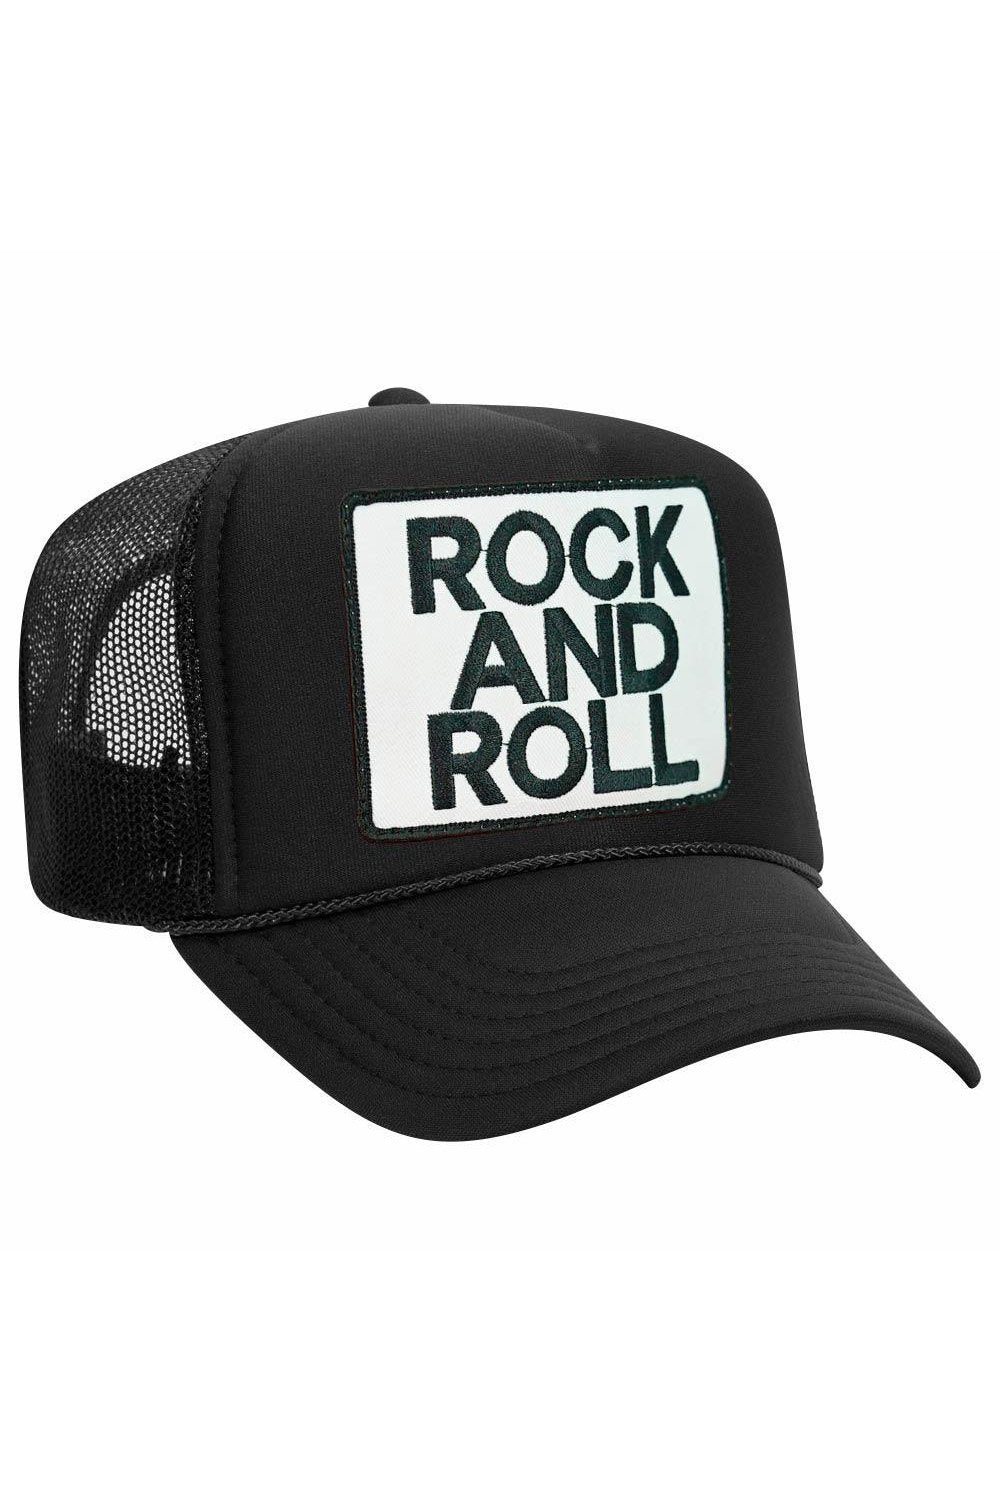 ROCK &amp; ROLL VINTAGE TRUCKER HAT HATS Aviator Nation OS BLACK 